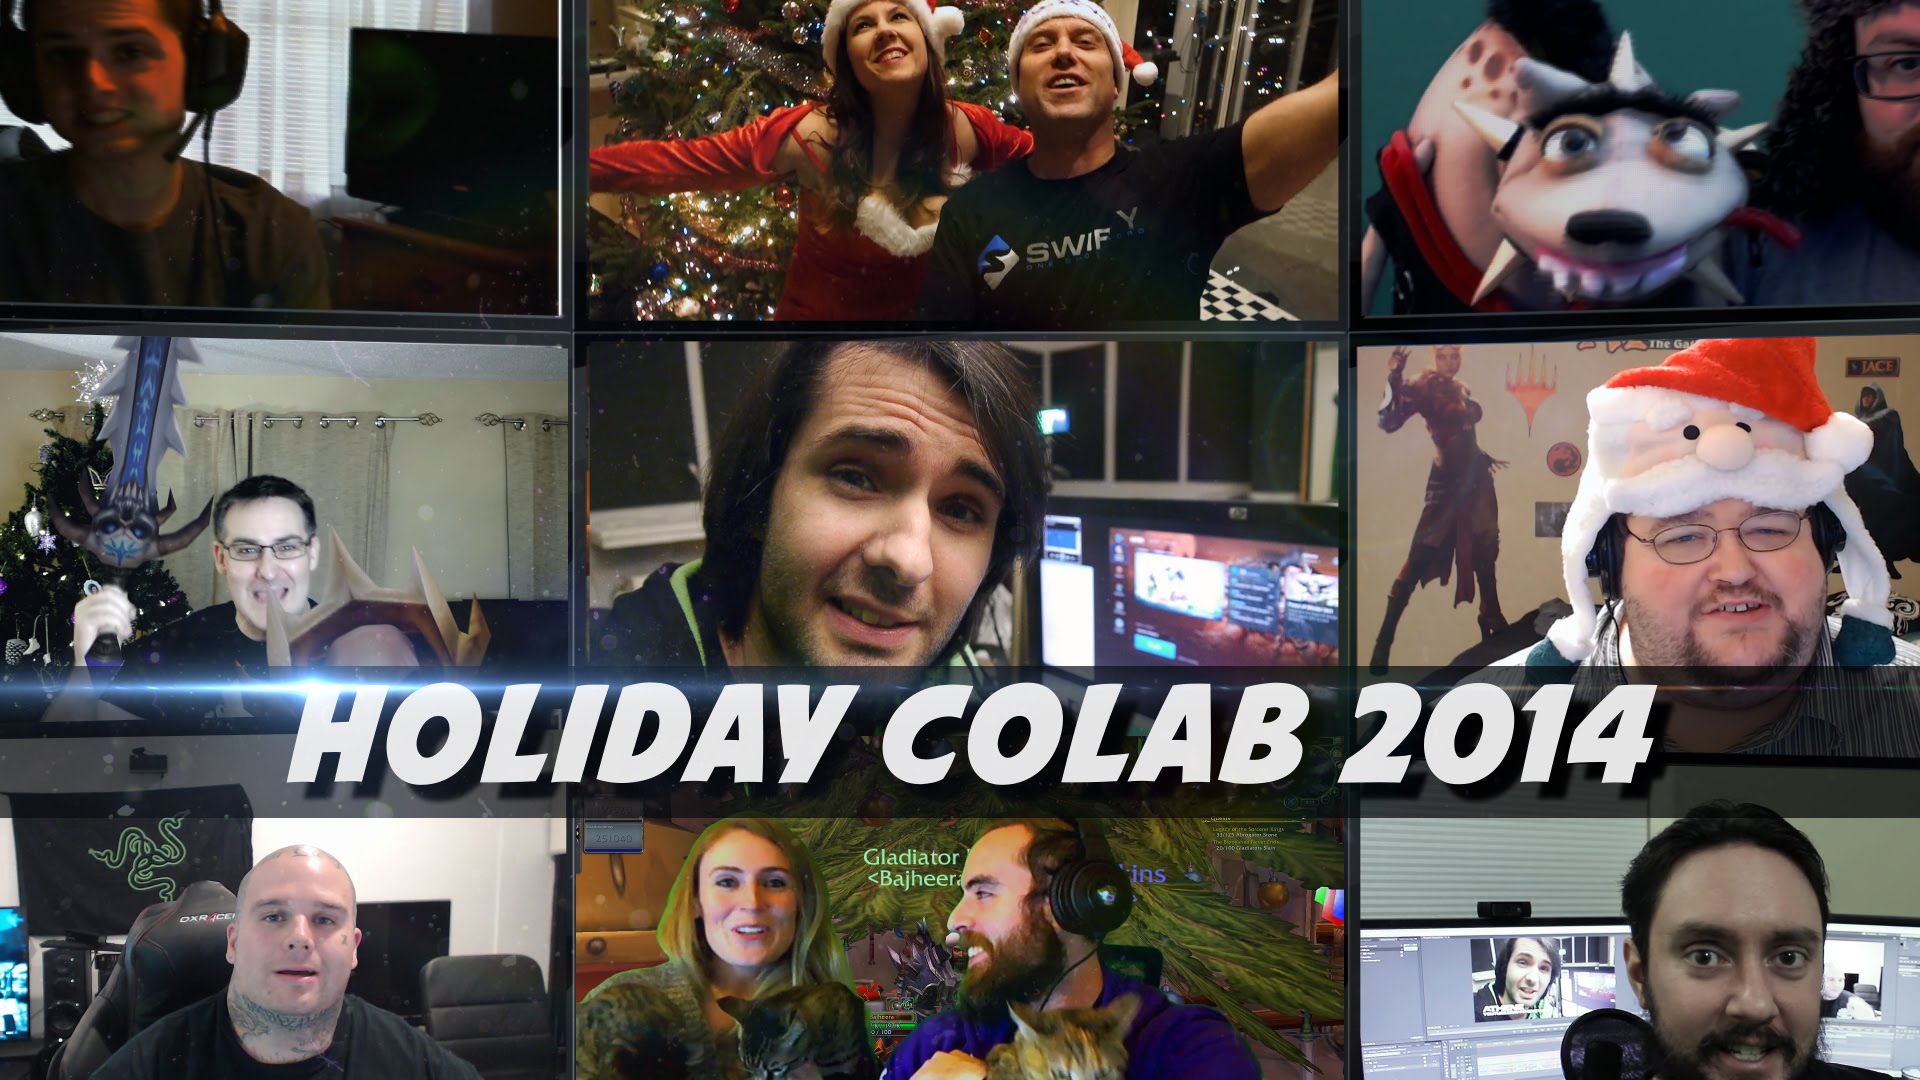 Holiday Colab Video 2014: Happy Holidays Everyone! [Psynaps]